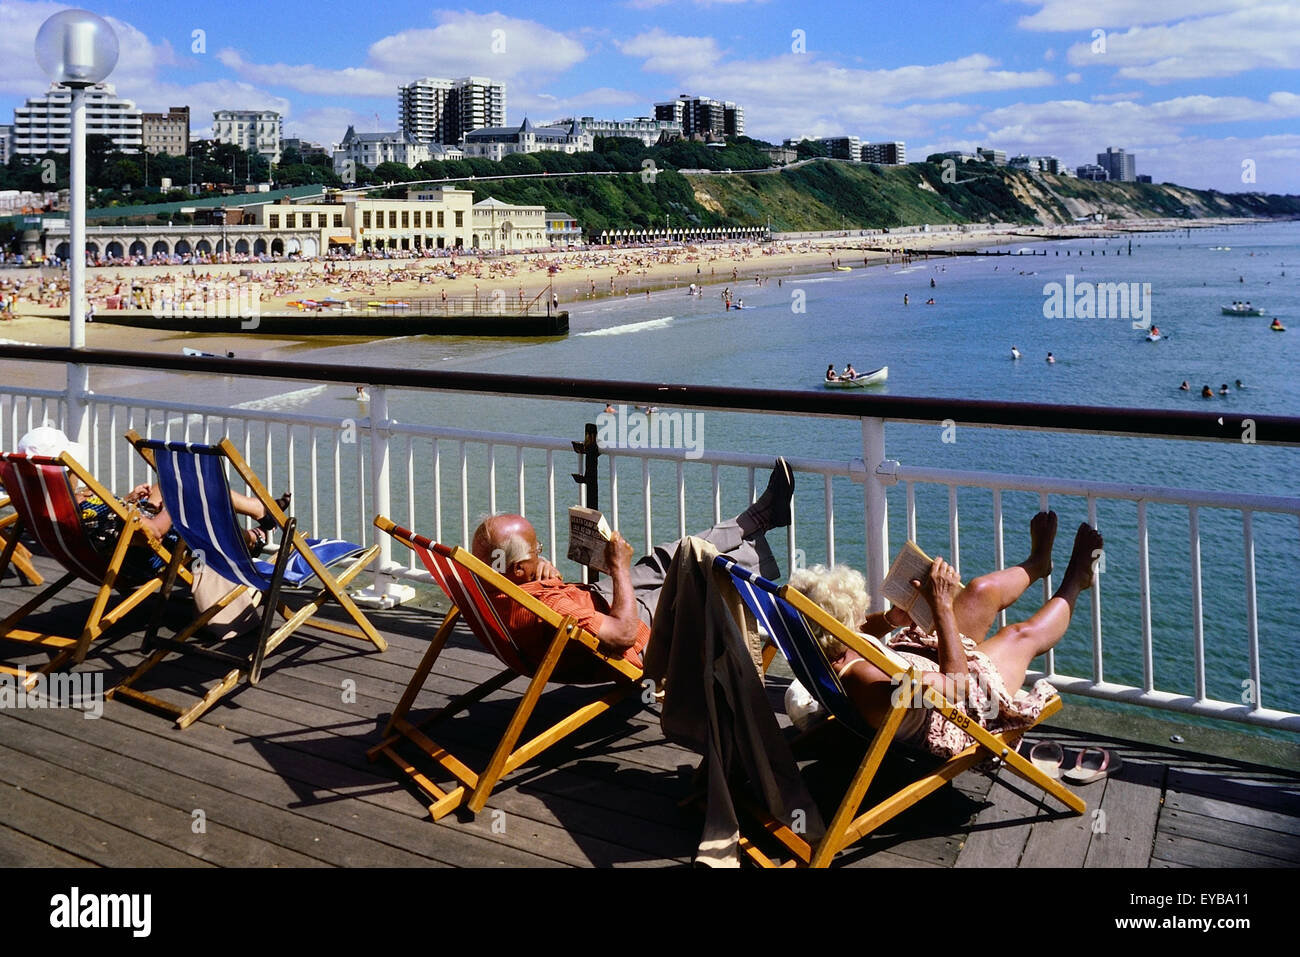 Sunbathers in deckchairs on Bournemouth pier. Dorset. England. UK Stock Photo